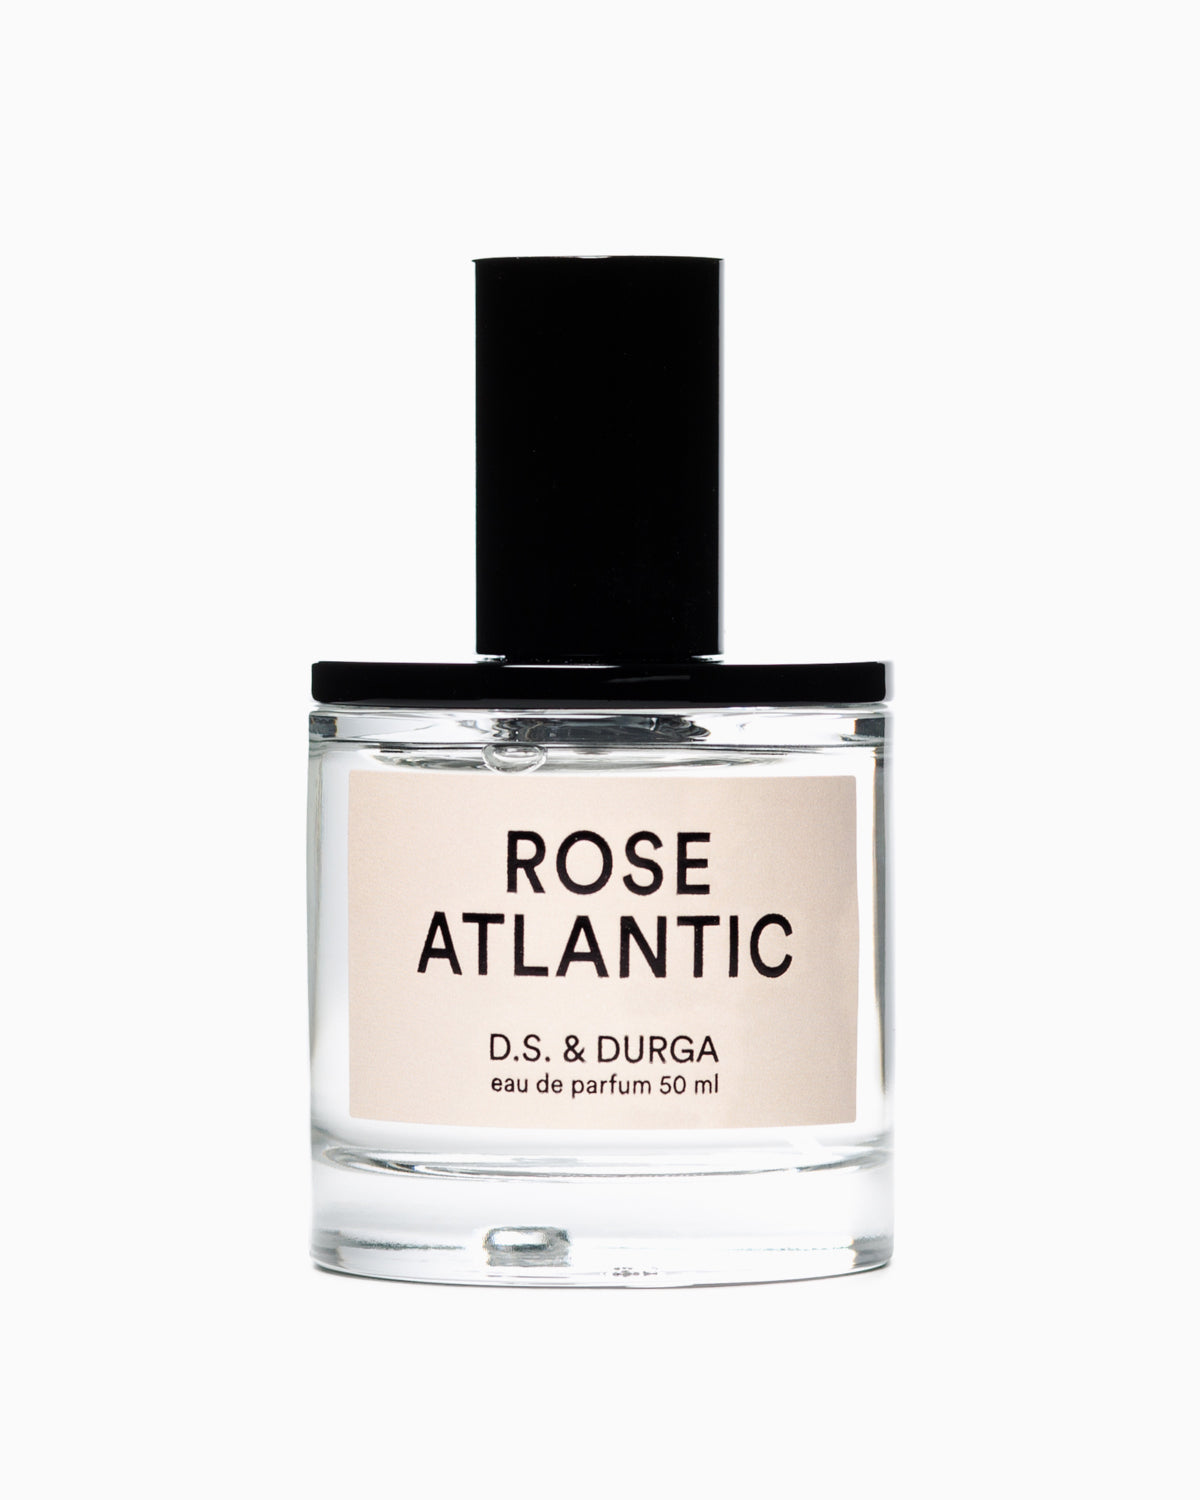 Rose Atlantic 50ml - D.S. & Durga